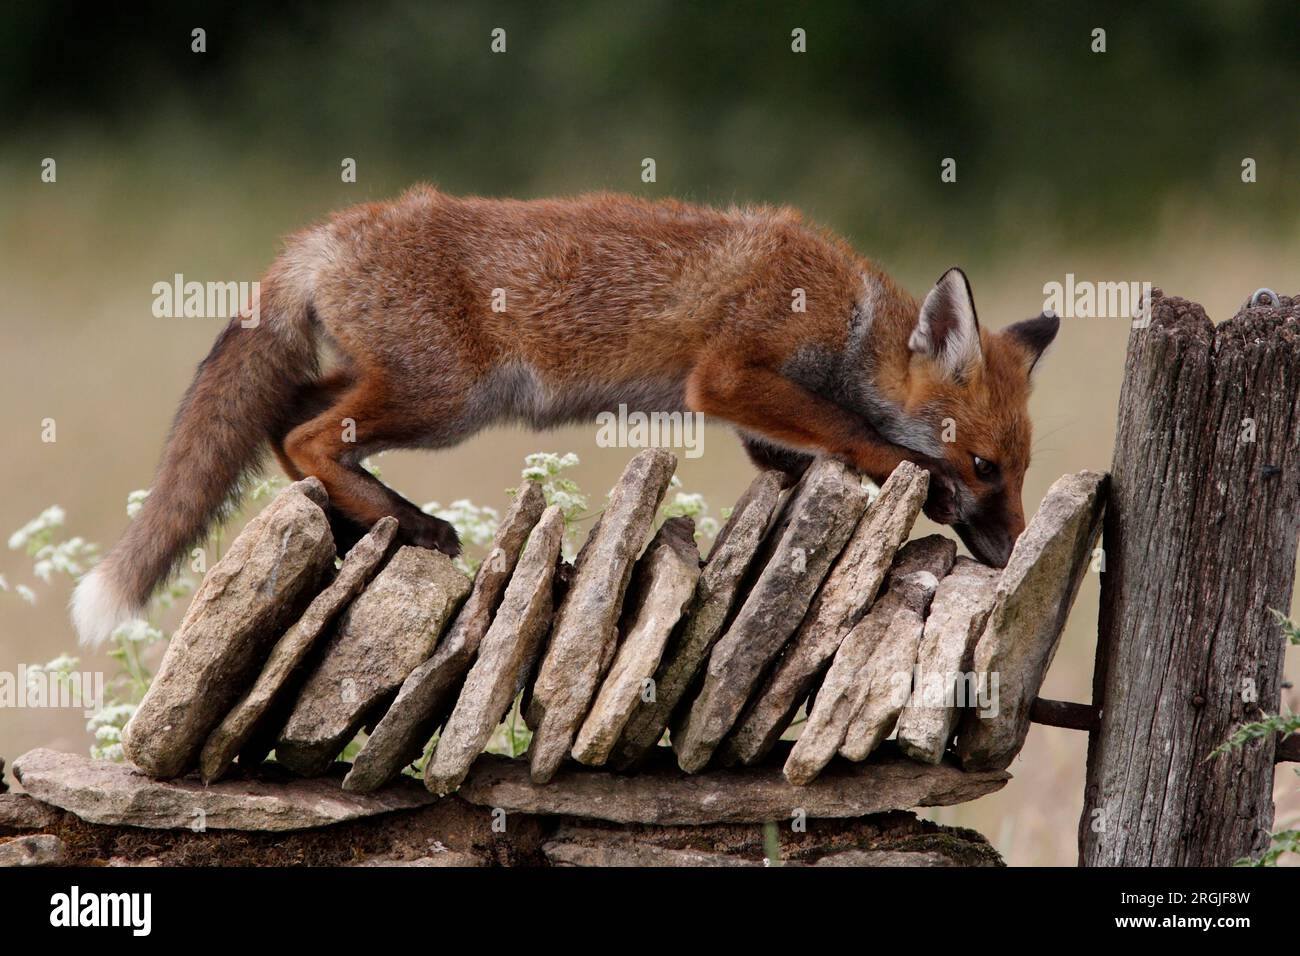 FOX (Vulpes vulpes) Investigating a wall, UK. Foto Stock